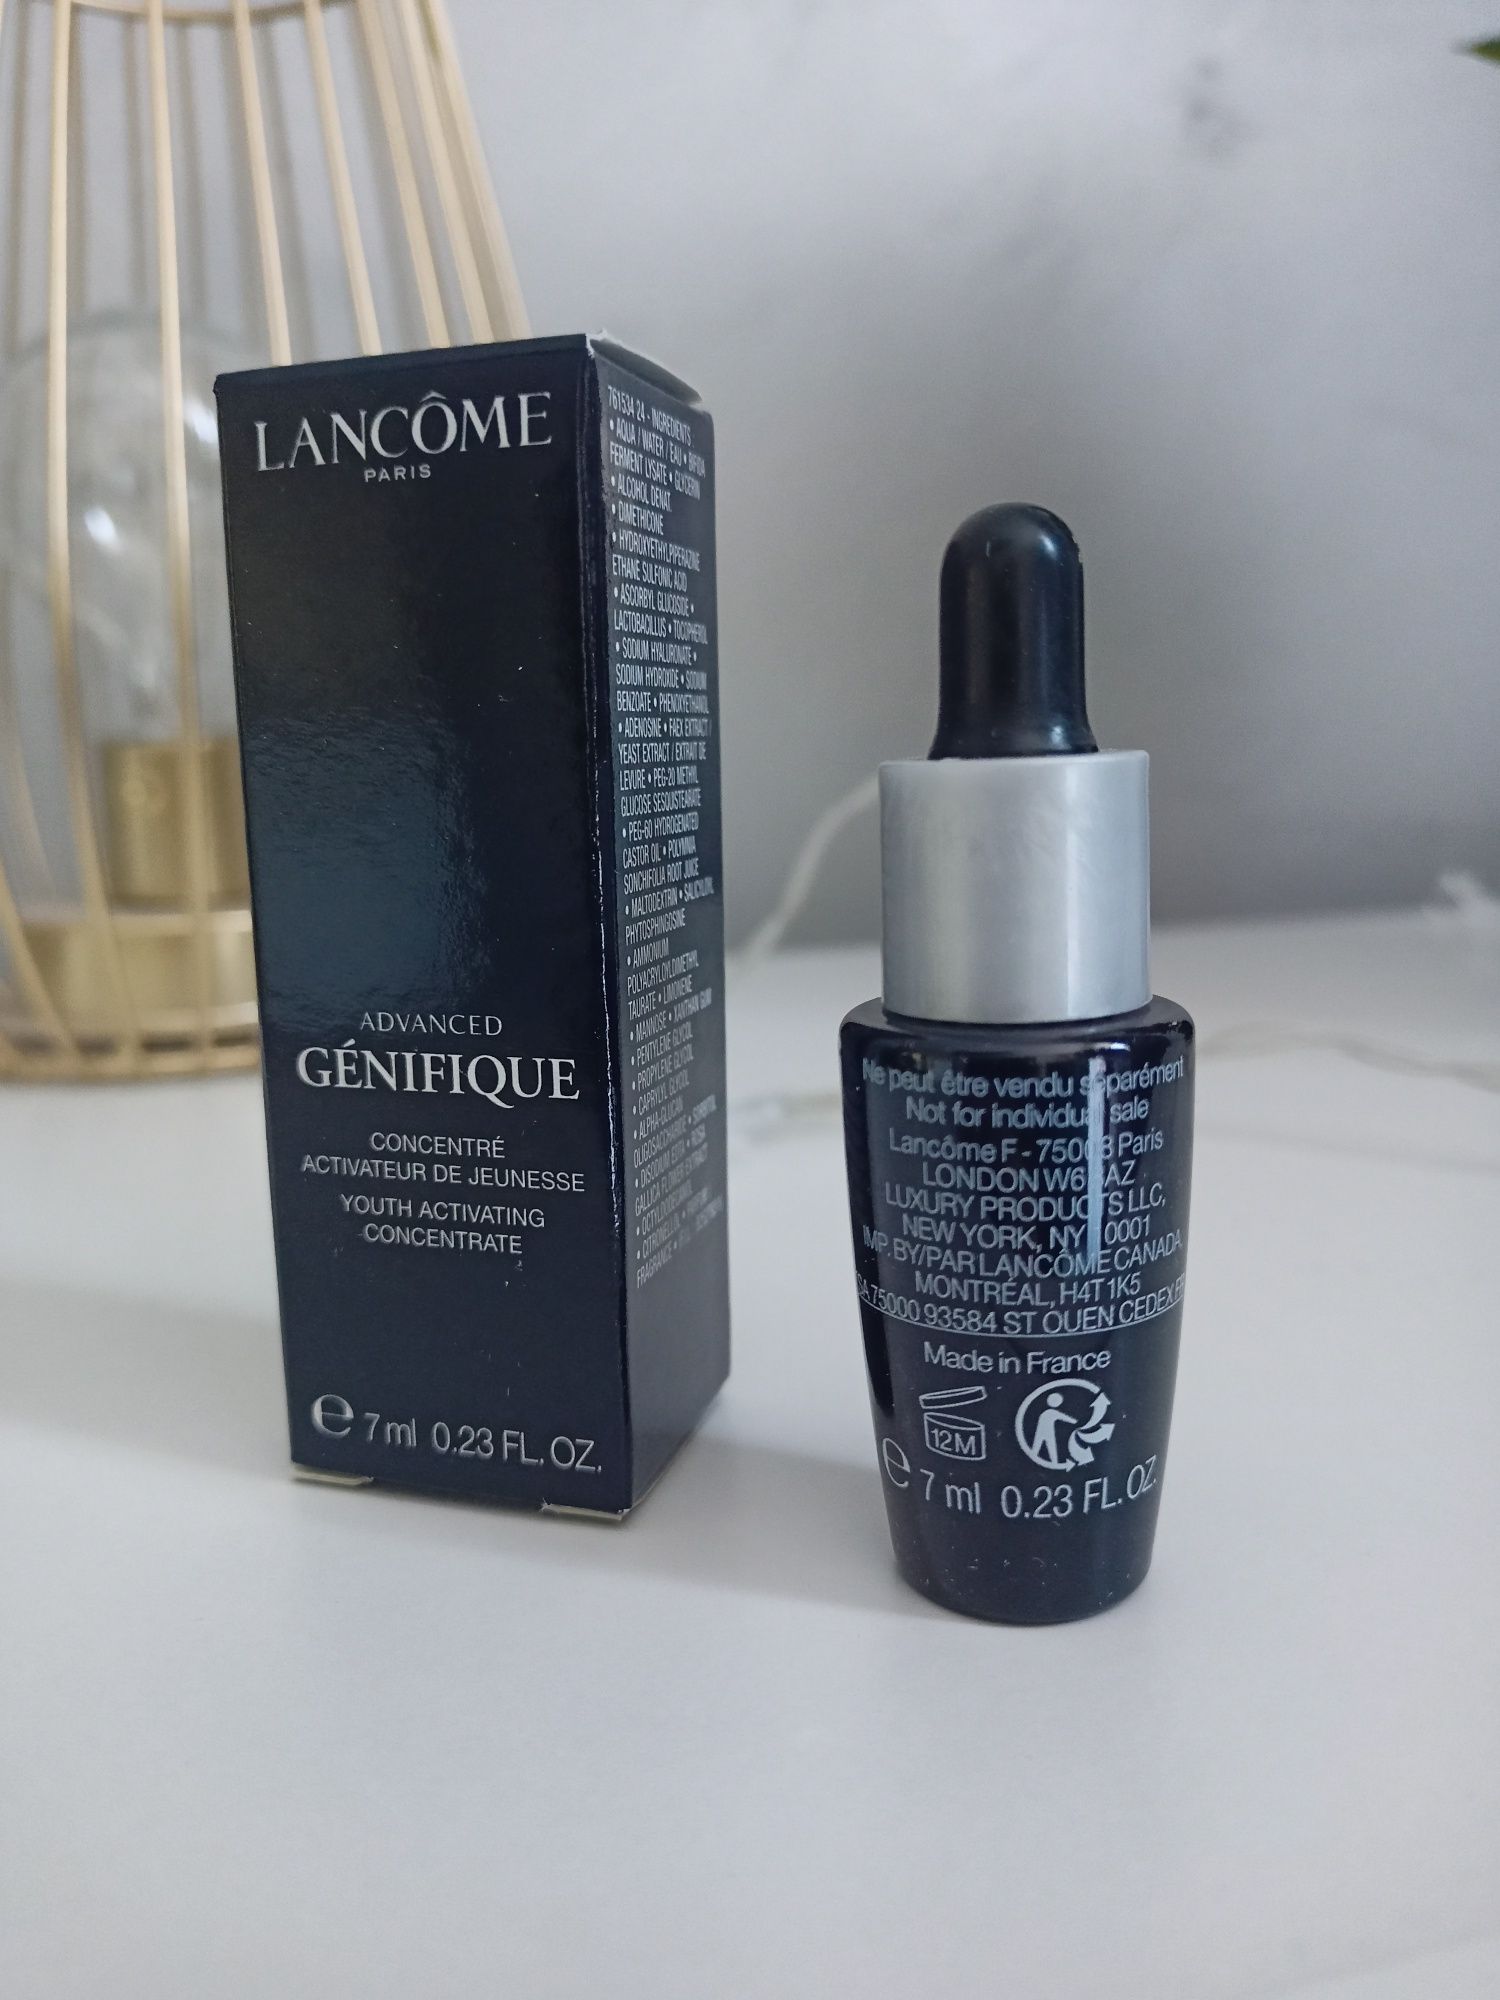 Lancome serum Advanced Genifique 7ml